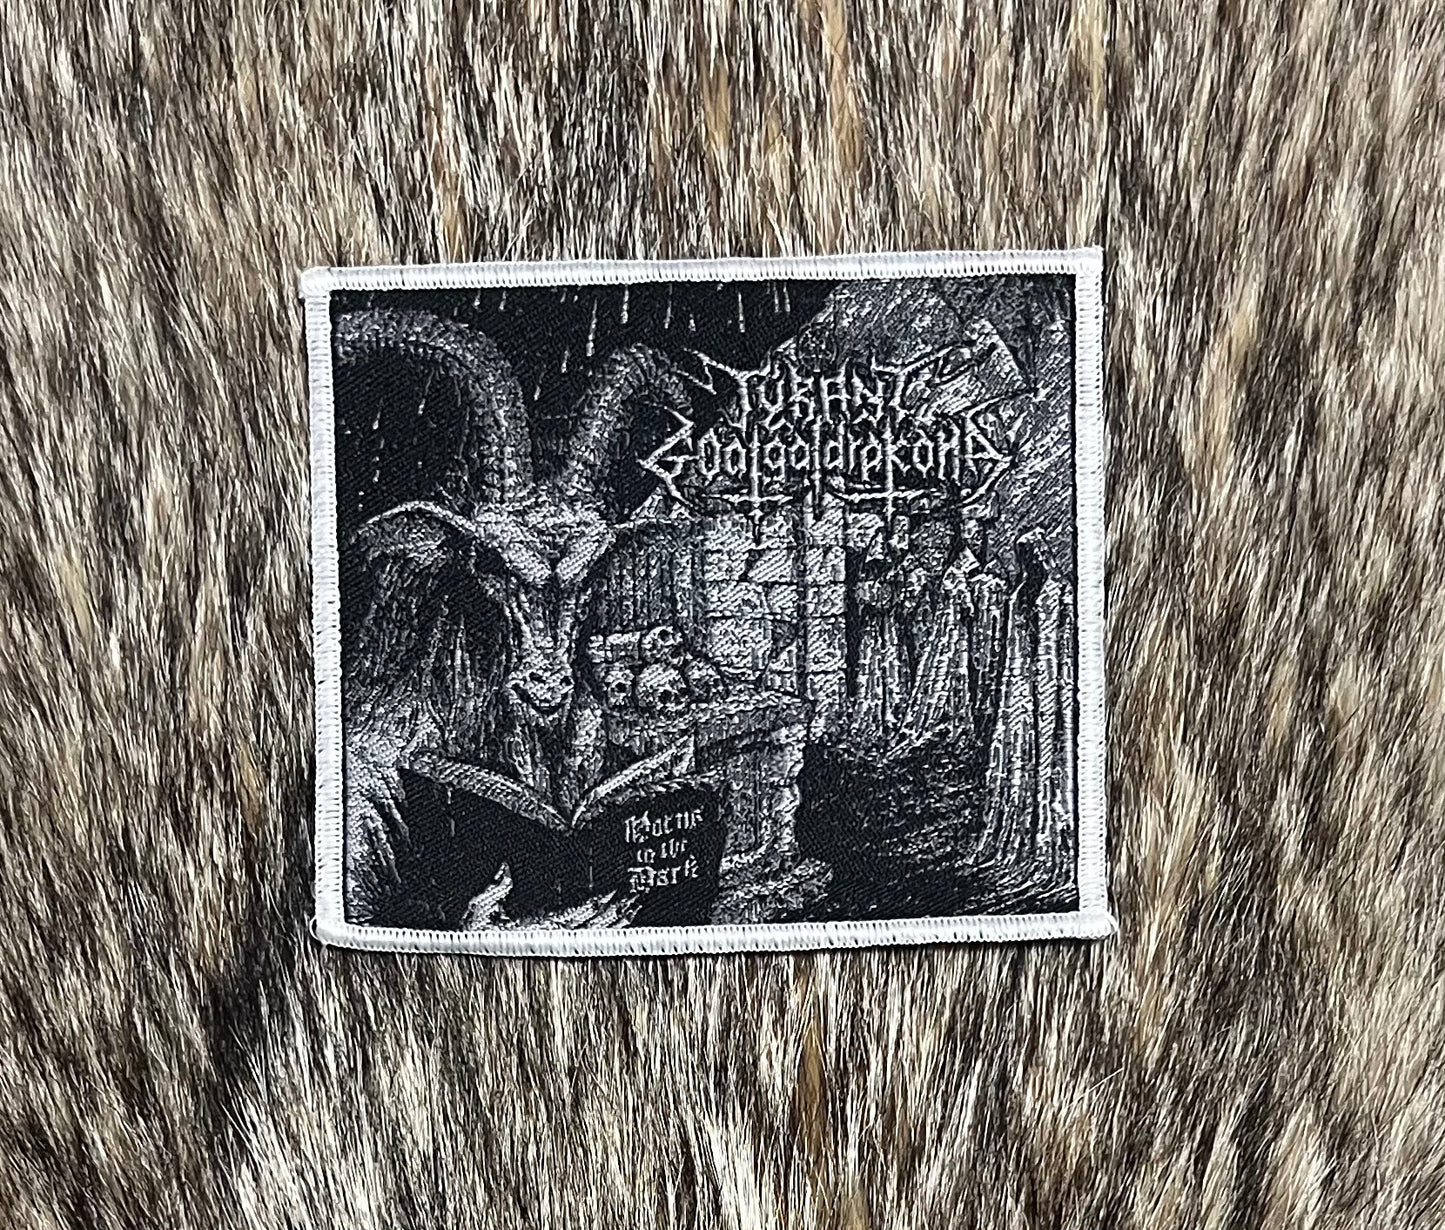 Tyrant Goatgaldrakona - Horns In The Dark Patch